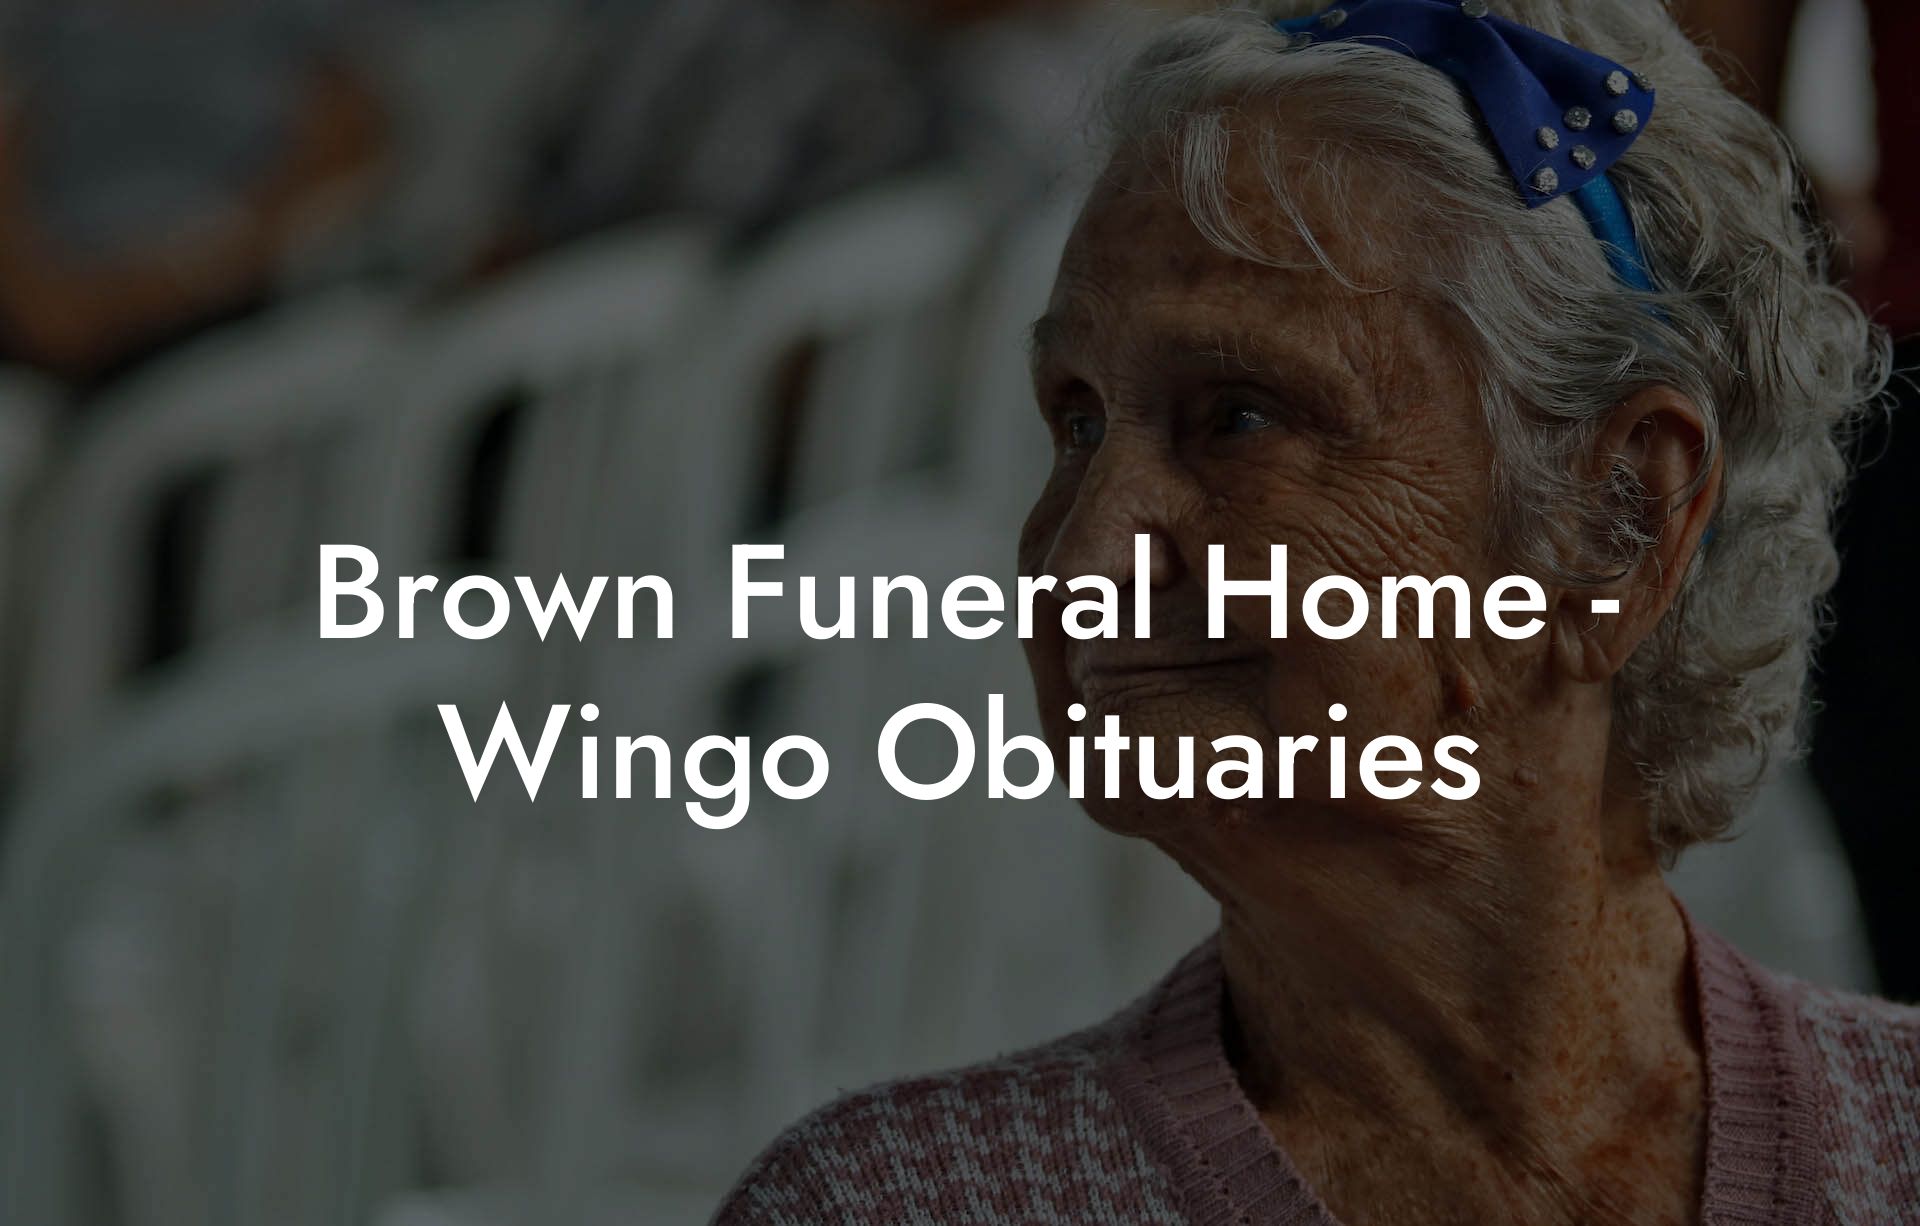 Brown Funeral Home - Wingo Obituaries